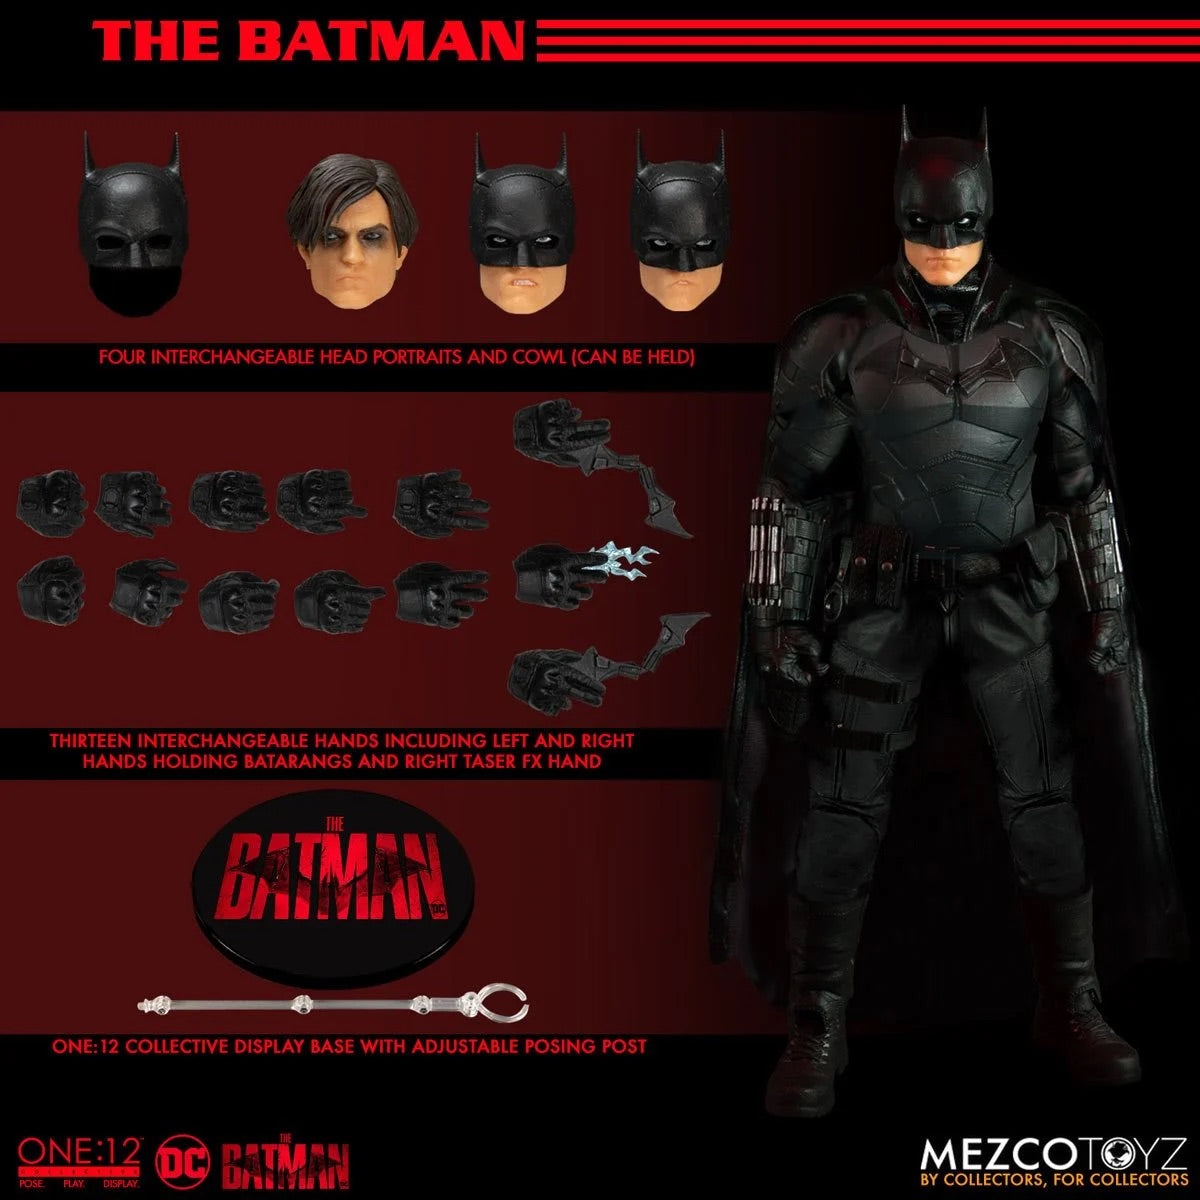 Replaced Mezco BvS Batman's body : r/ActionFigures